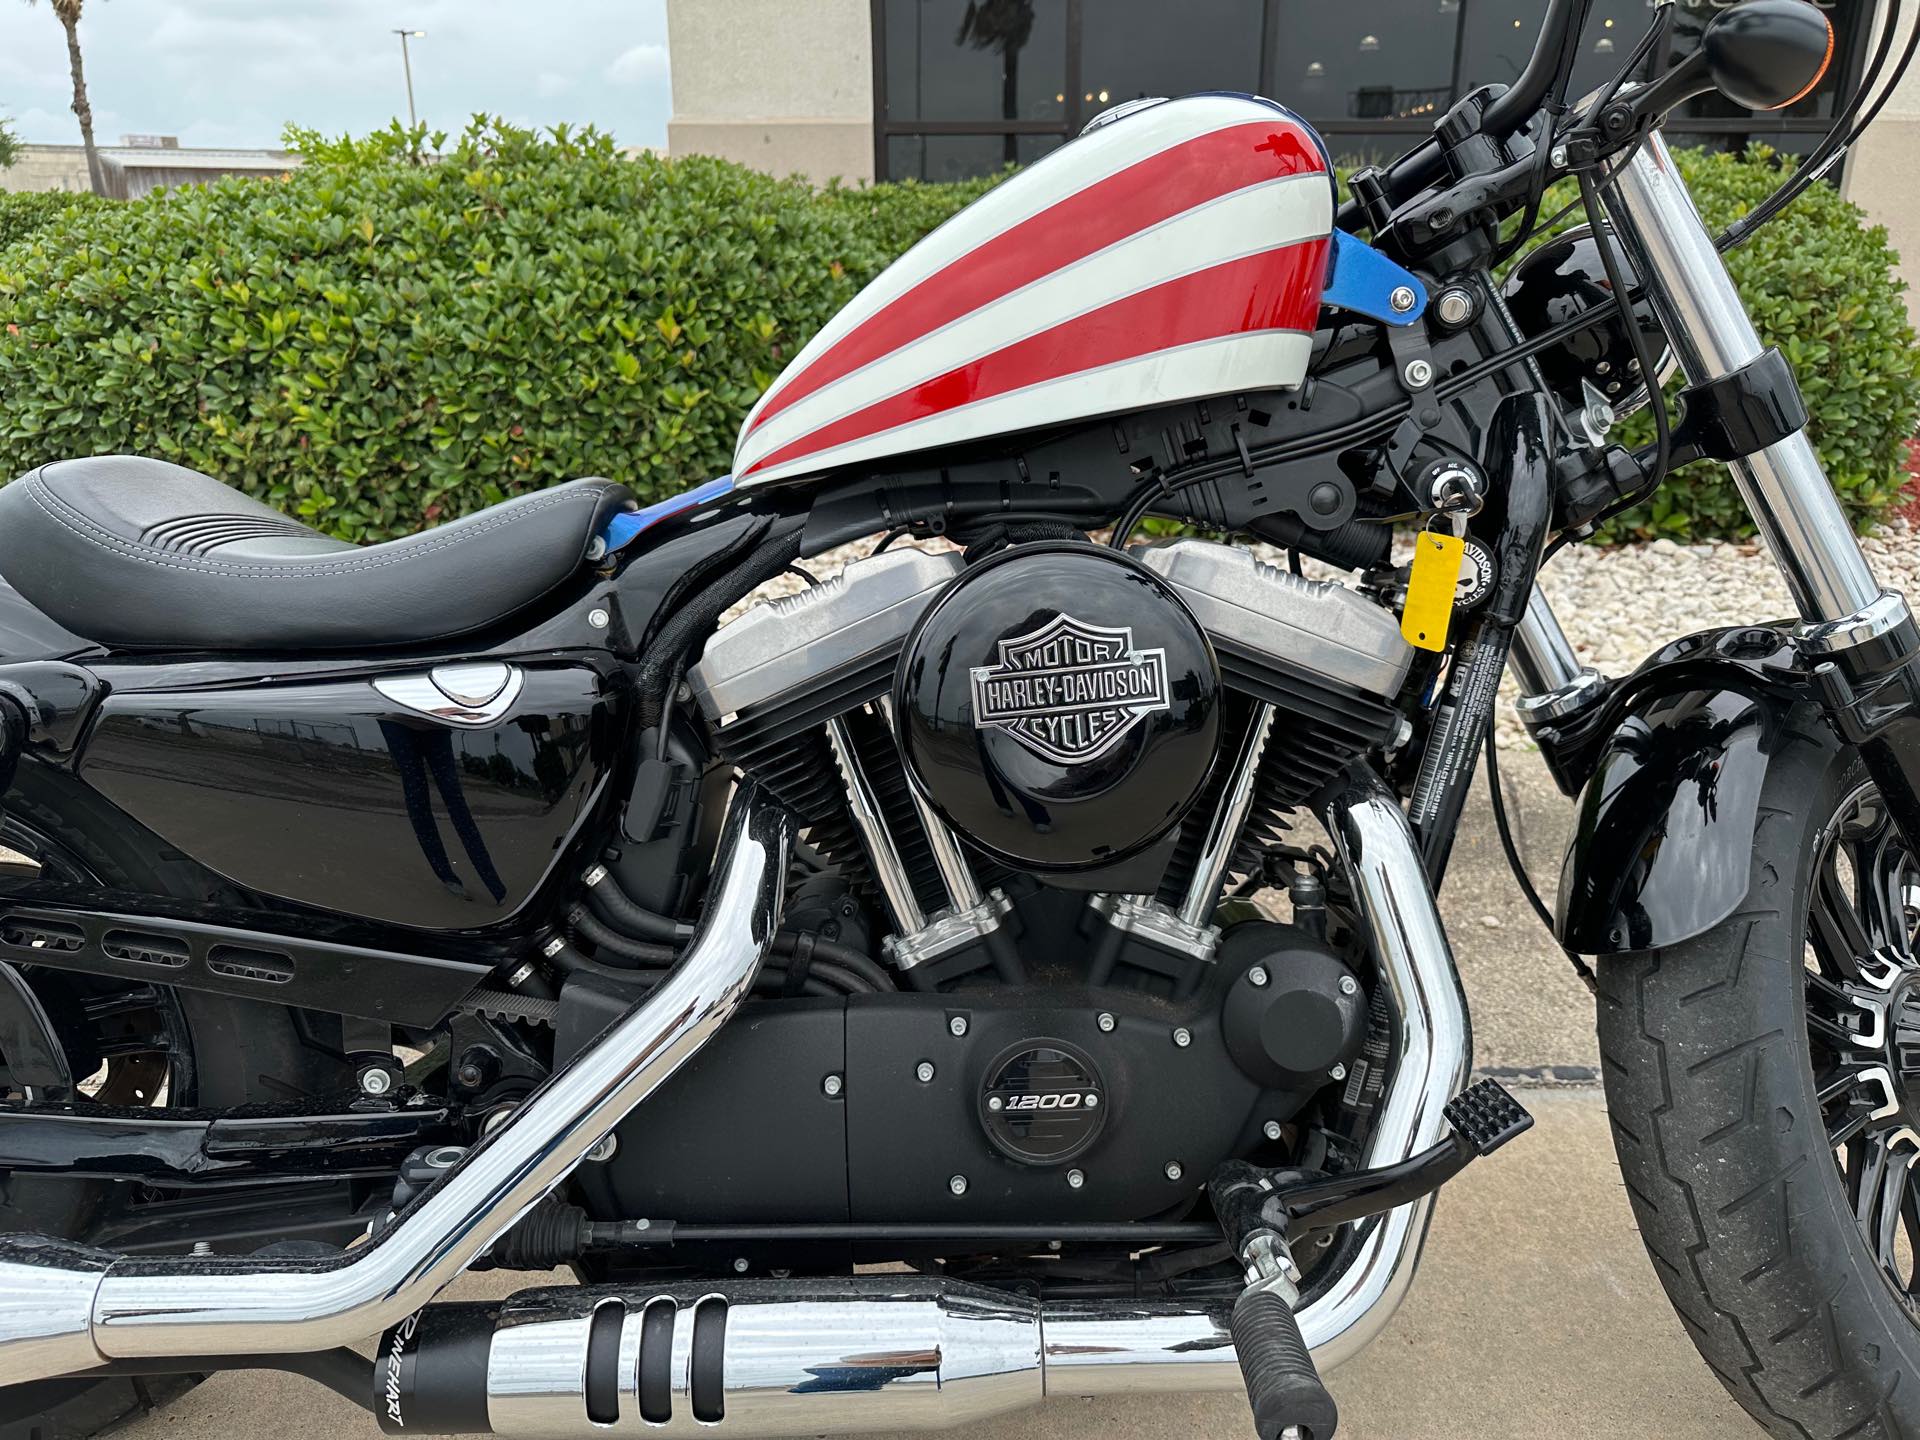 2019 Harley-Davidson Sportster Forty-Eight at Corpus Christi Harley Davidson